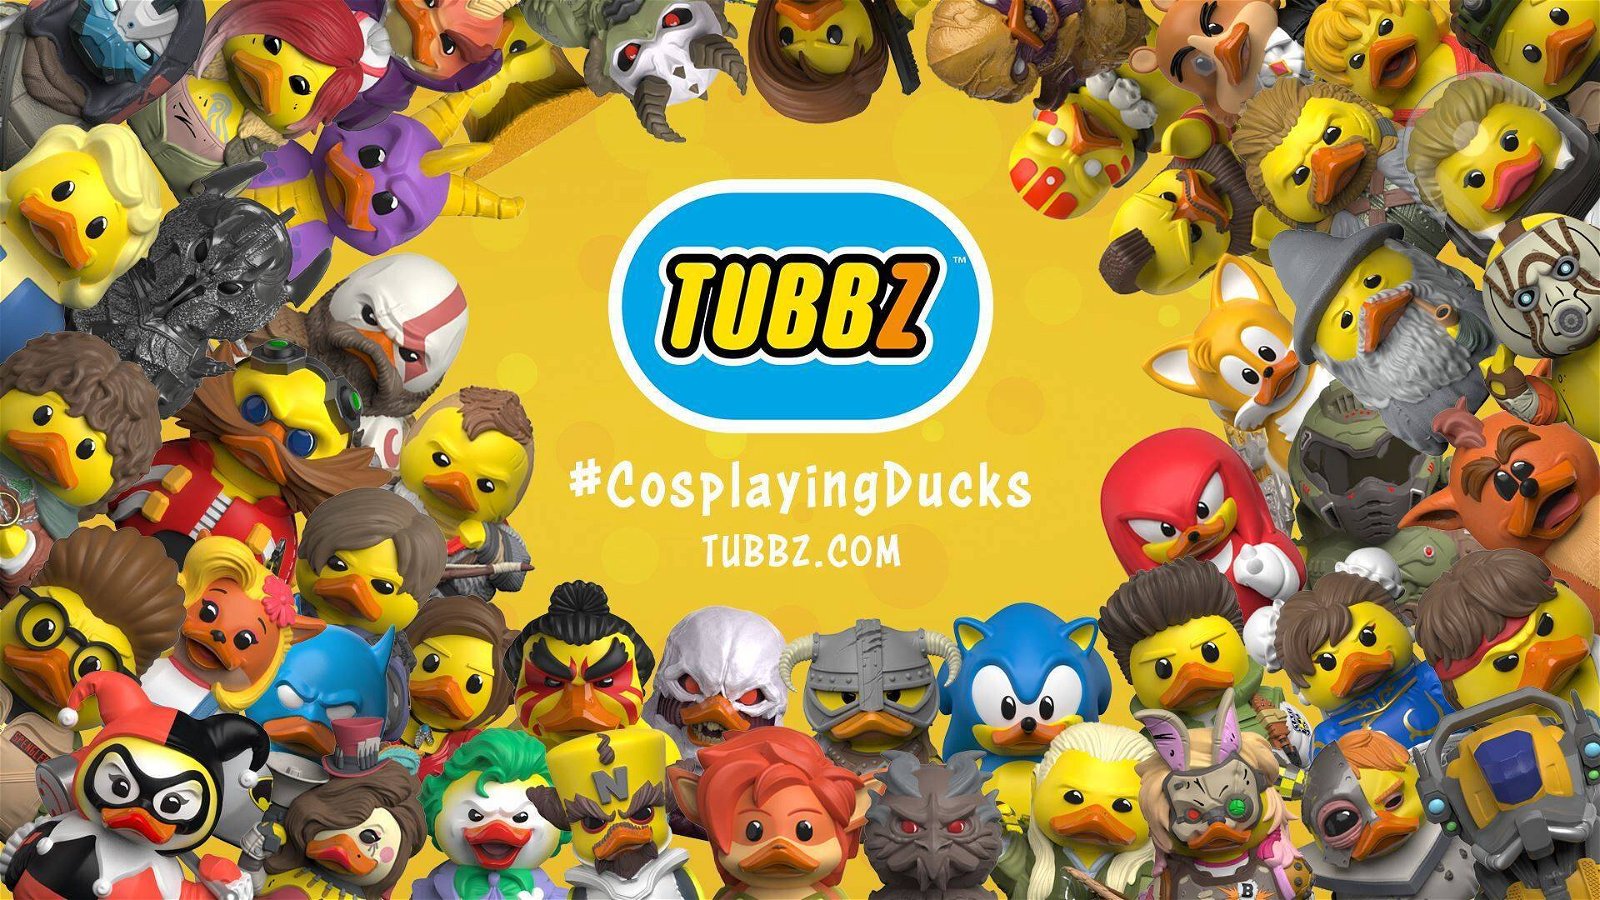 Immagine di TUBBZ: le bellissime paperelle in cosplay scontate del 40%!